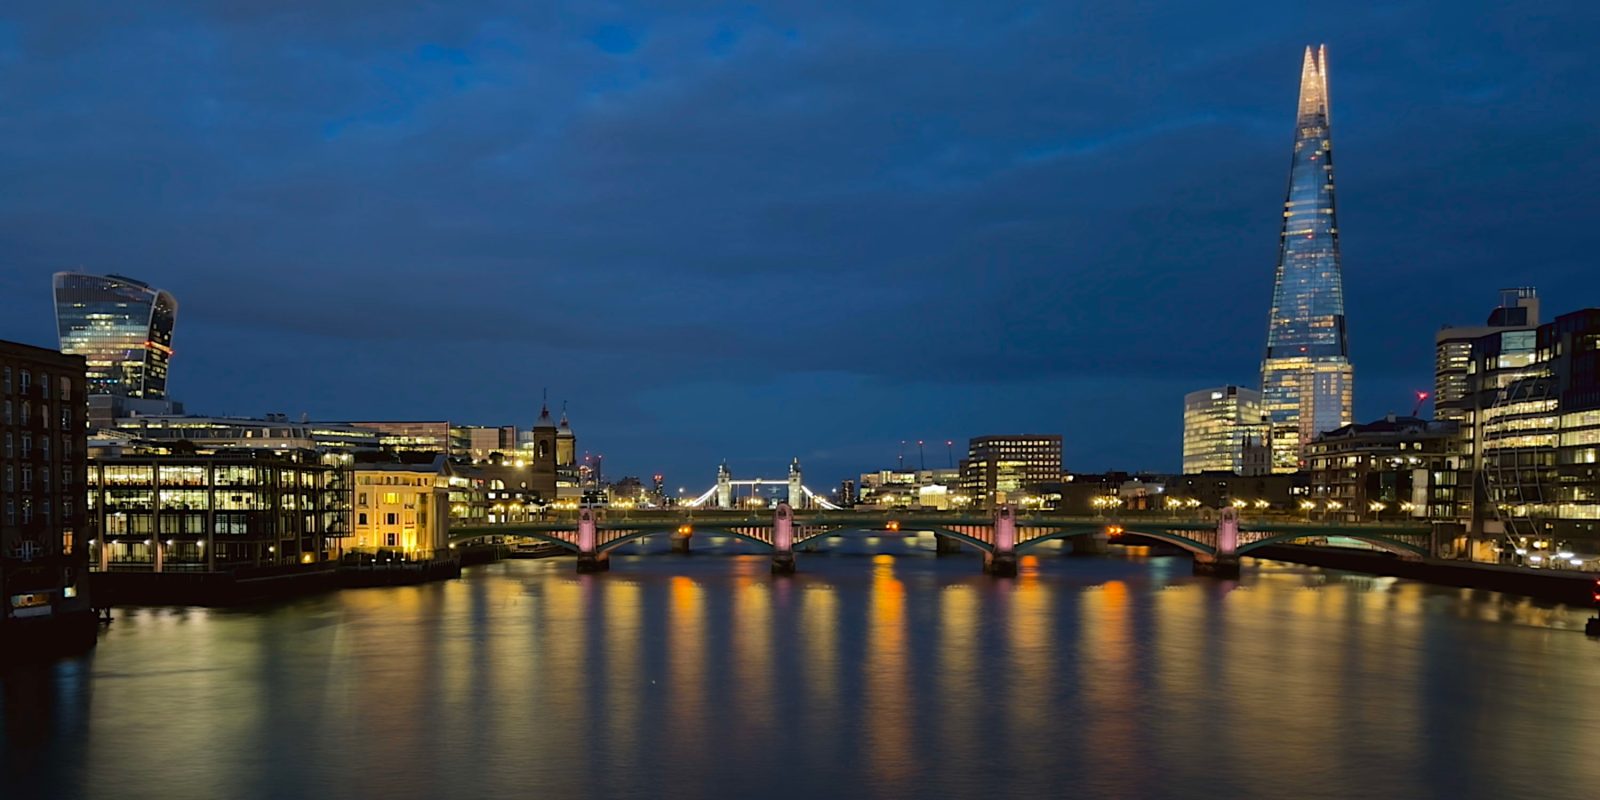 Long exposure photos on an iPhone | 30-second London night shot